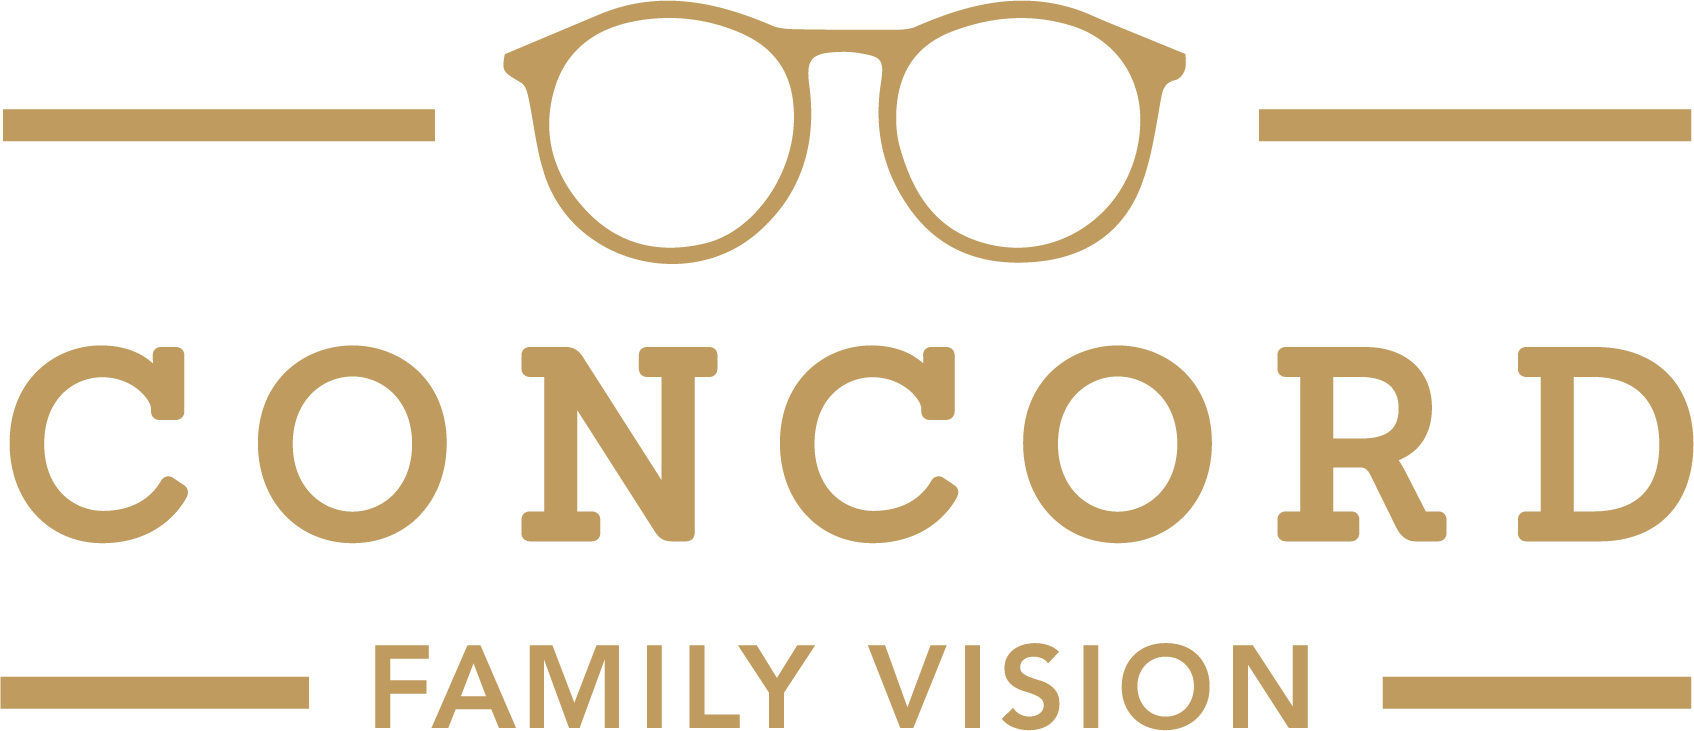 Concord Family Vision